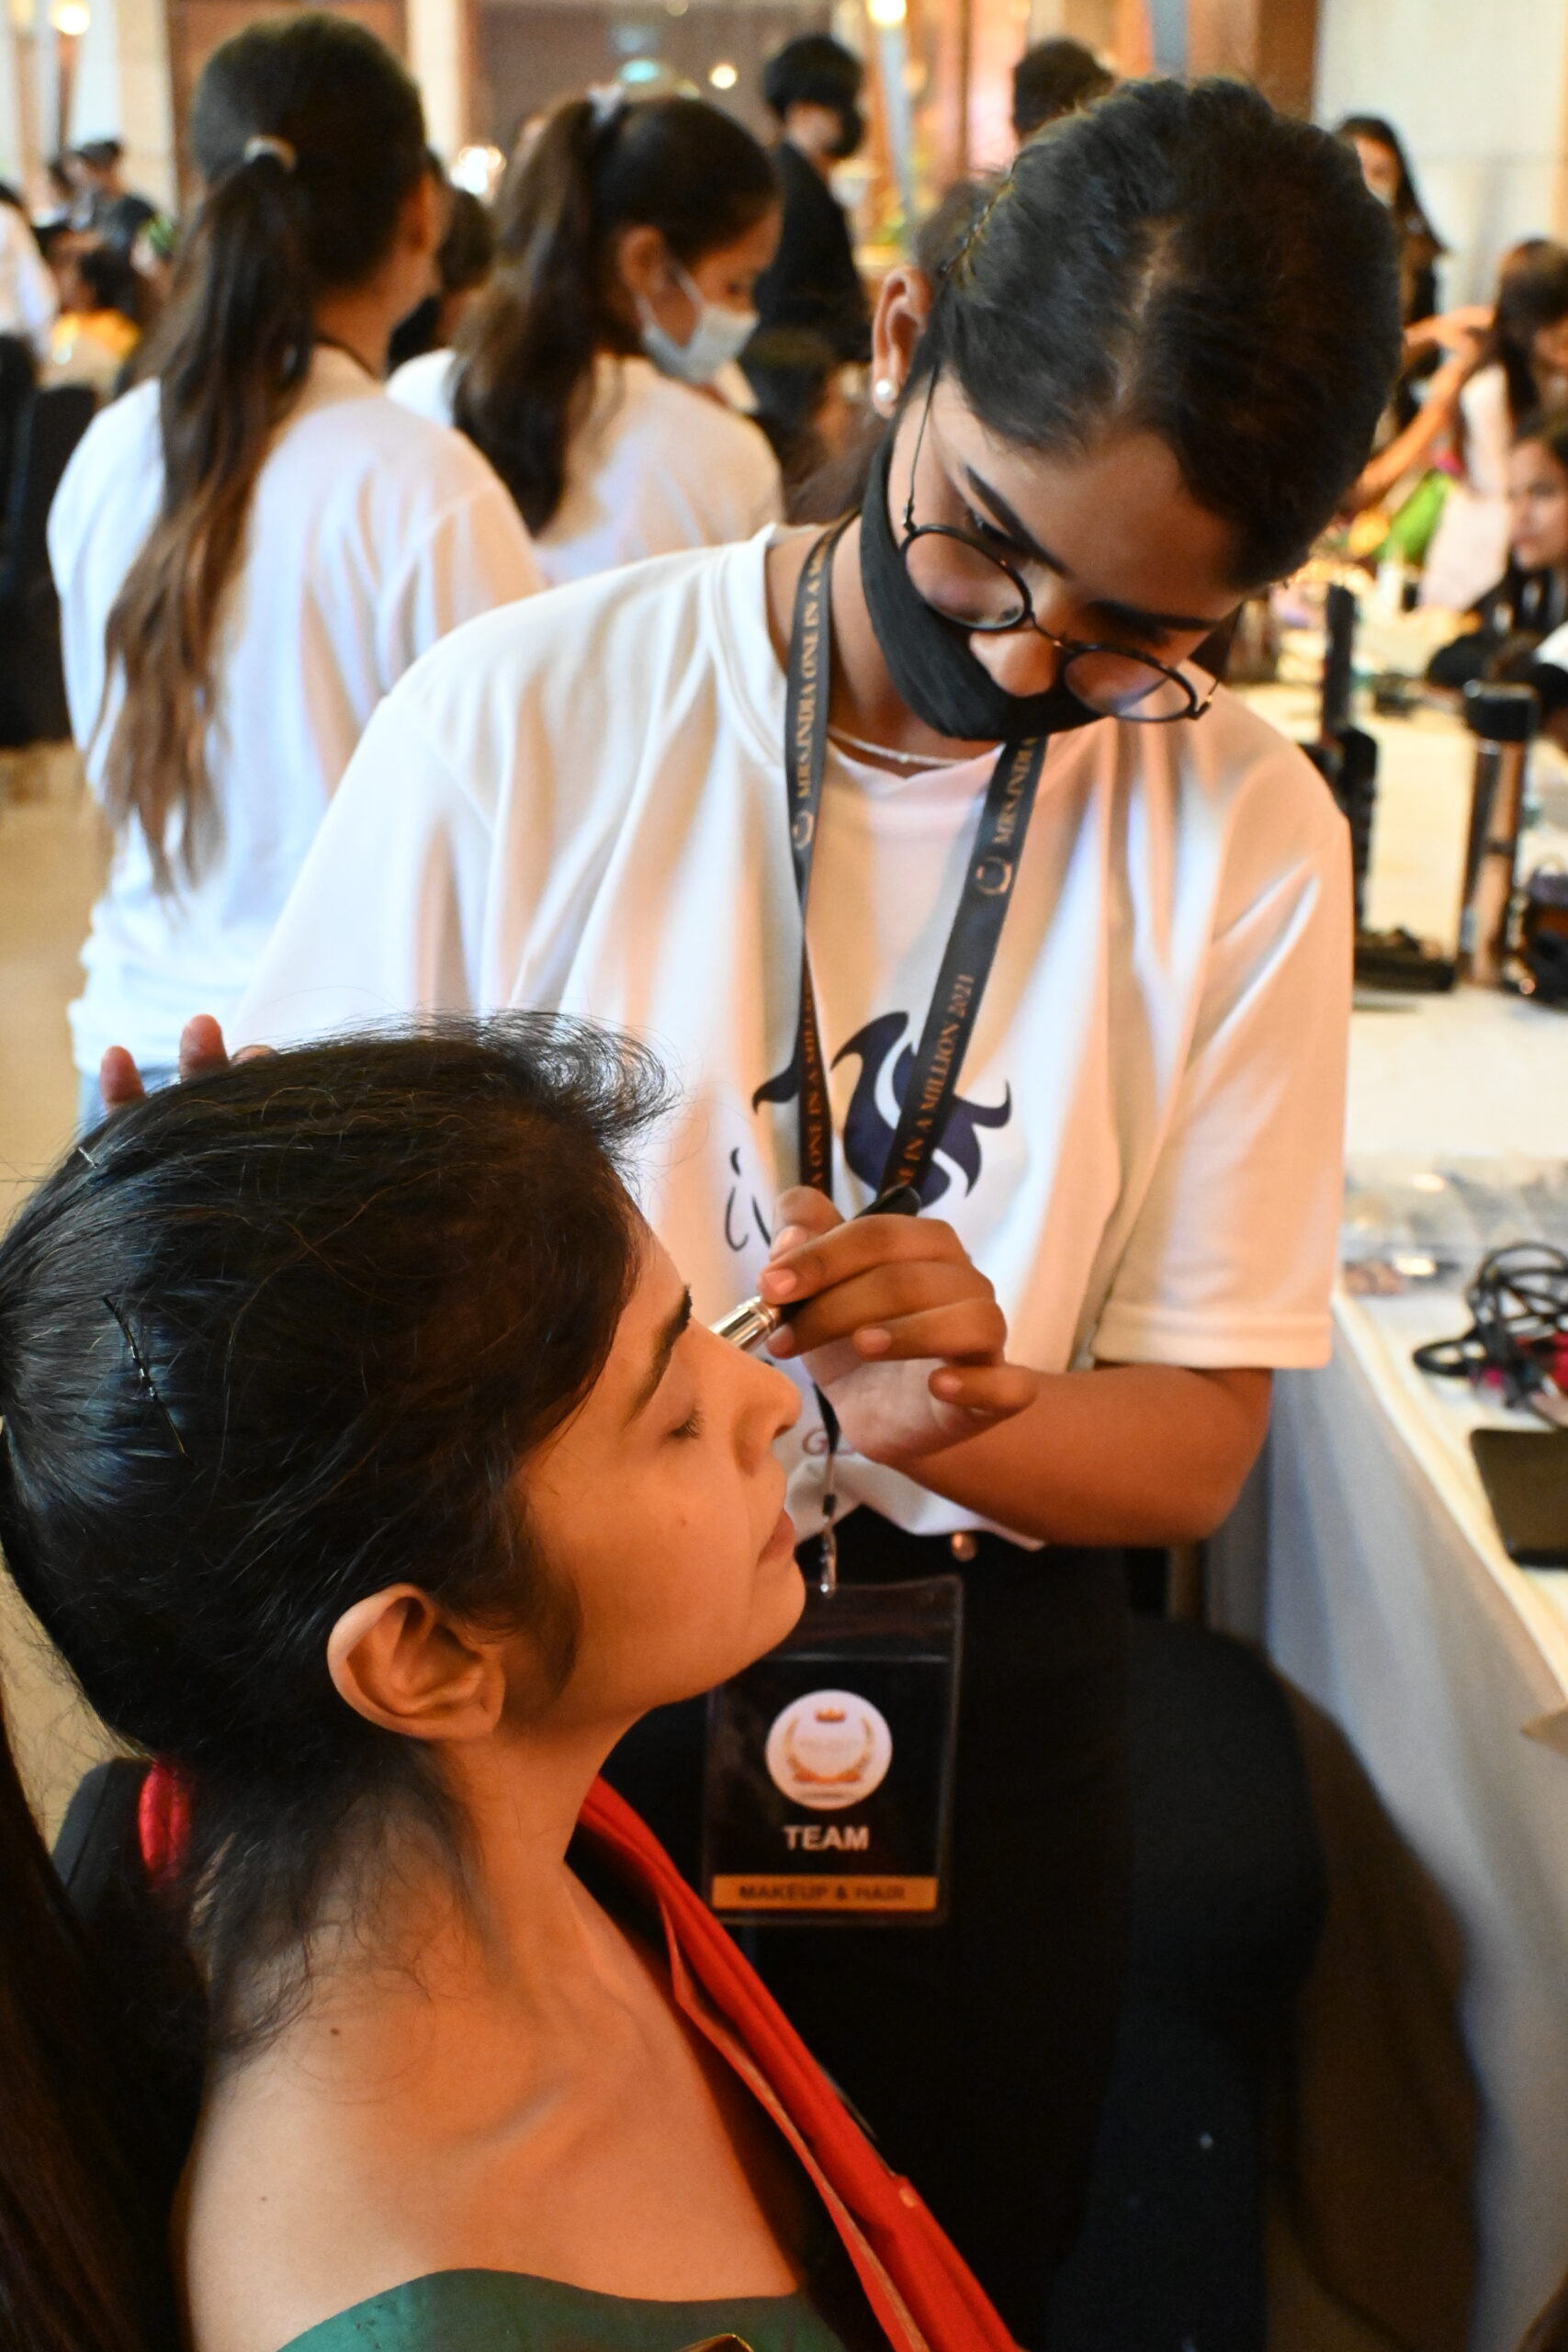 Best Makeup Institute in Delhi - Make U Glam Academy - Megha Thakur